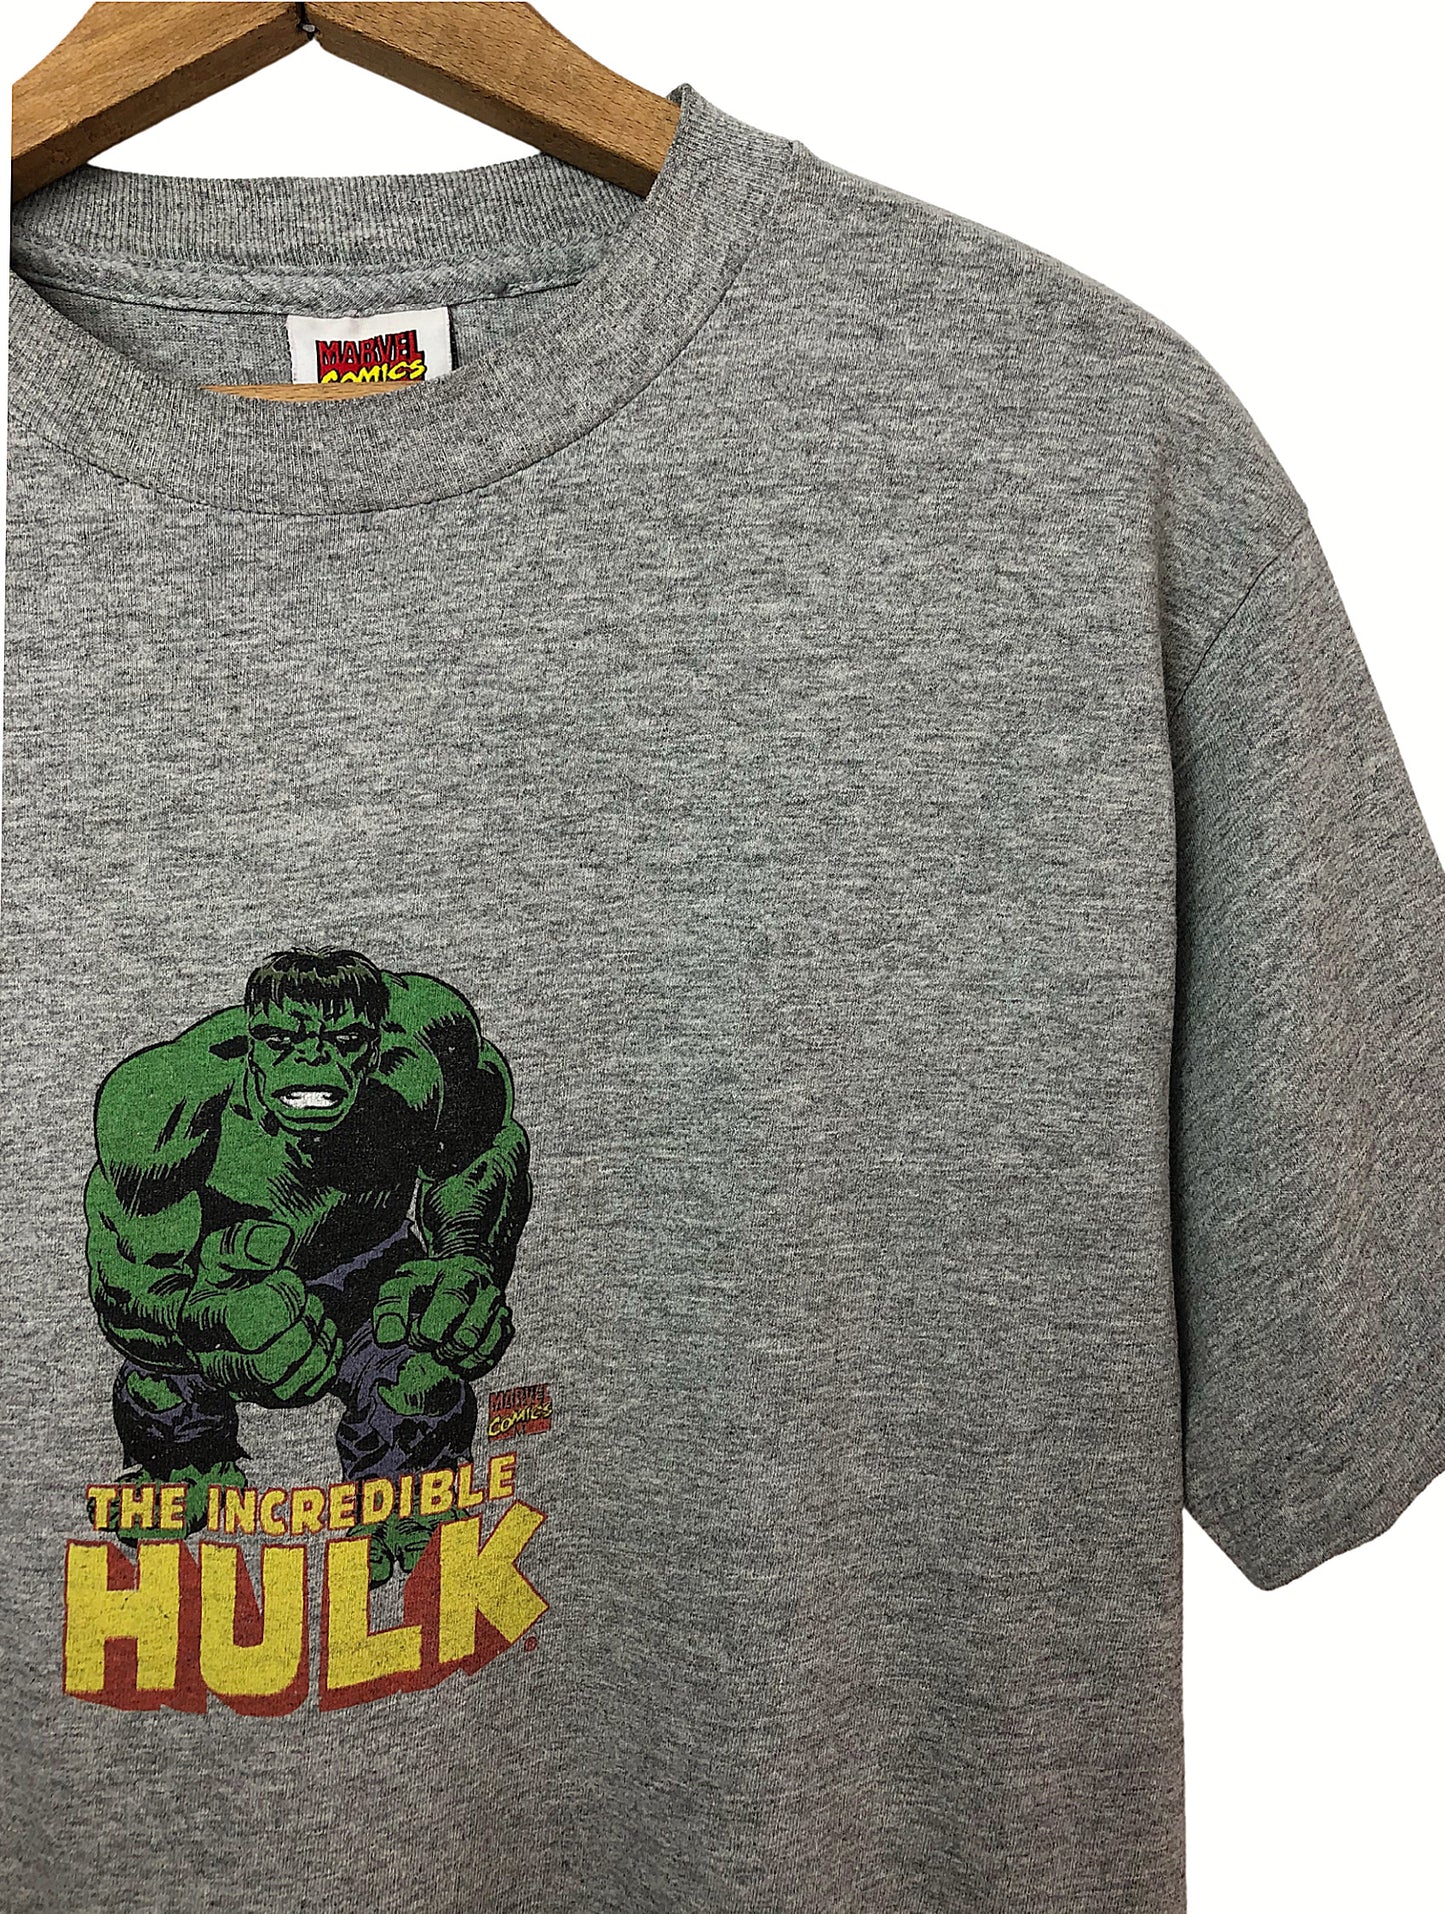 2006 The Incredible Hulk Marvel Comics T-shirt